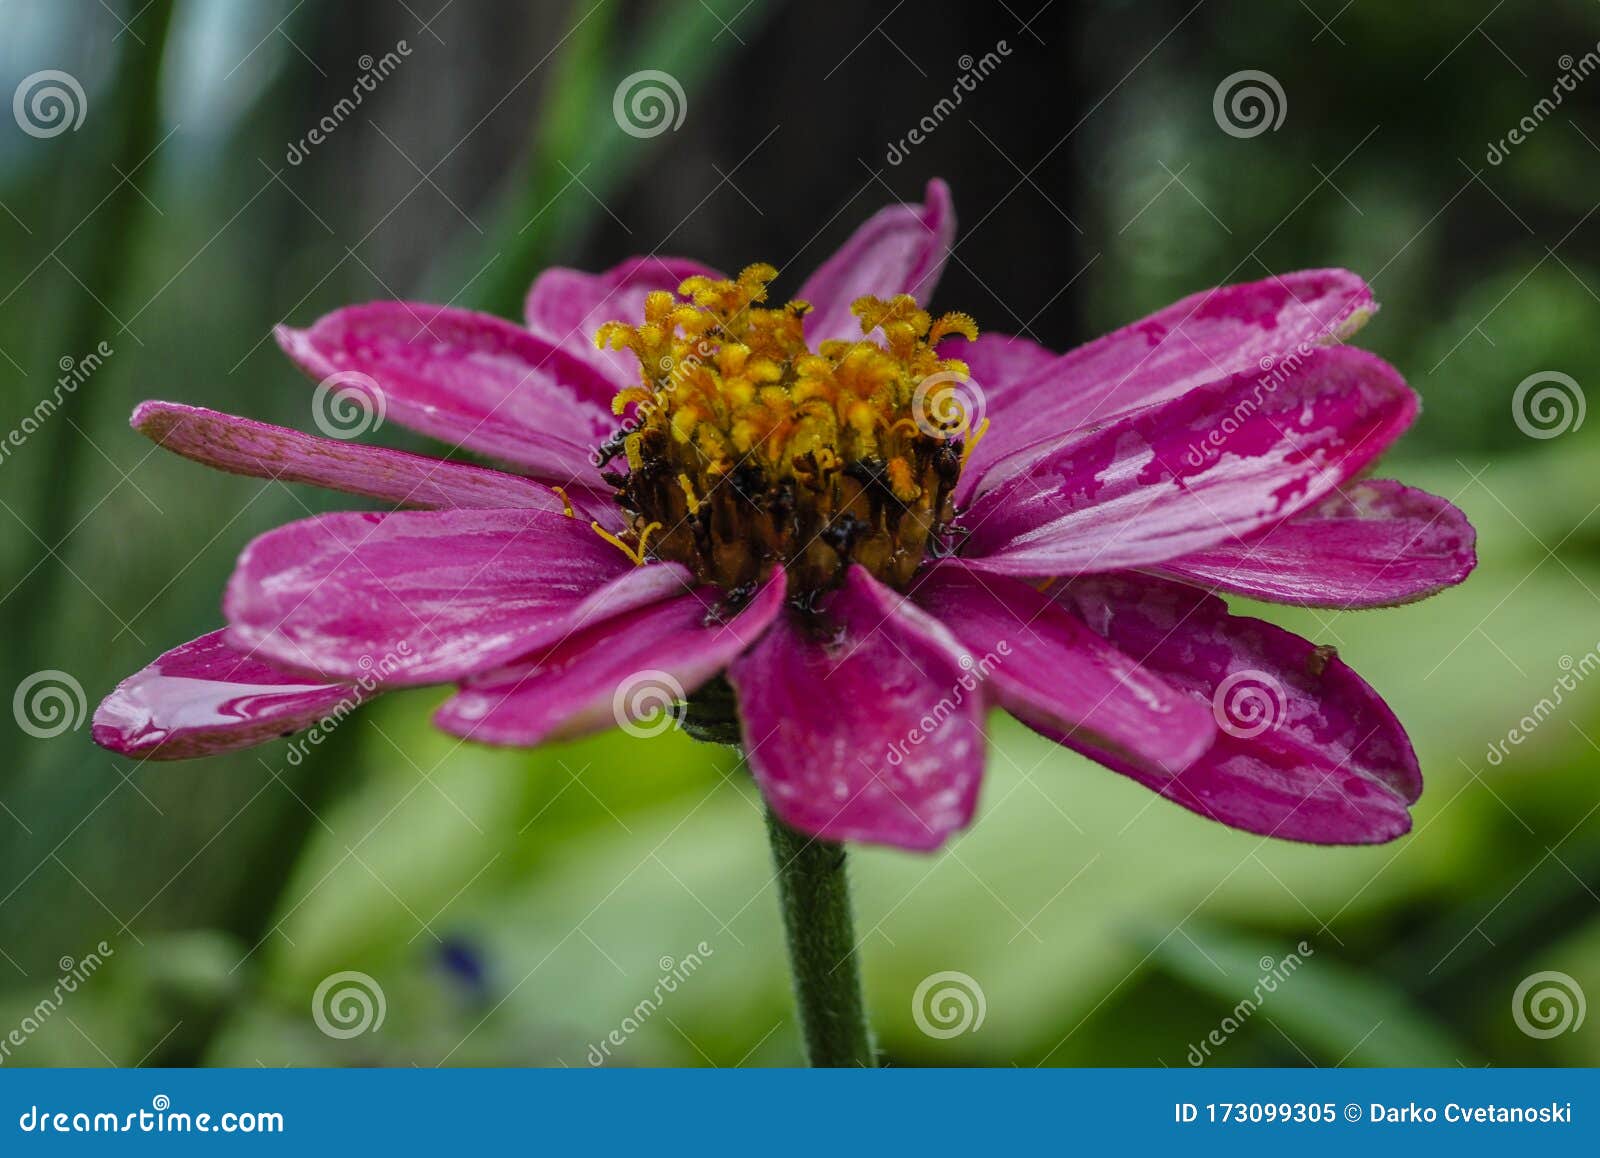 Beautiful Zinnia Flowers In In The Home Garden Stock Image Image Of Yellow Beautiful 173099305